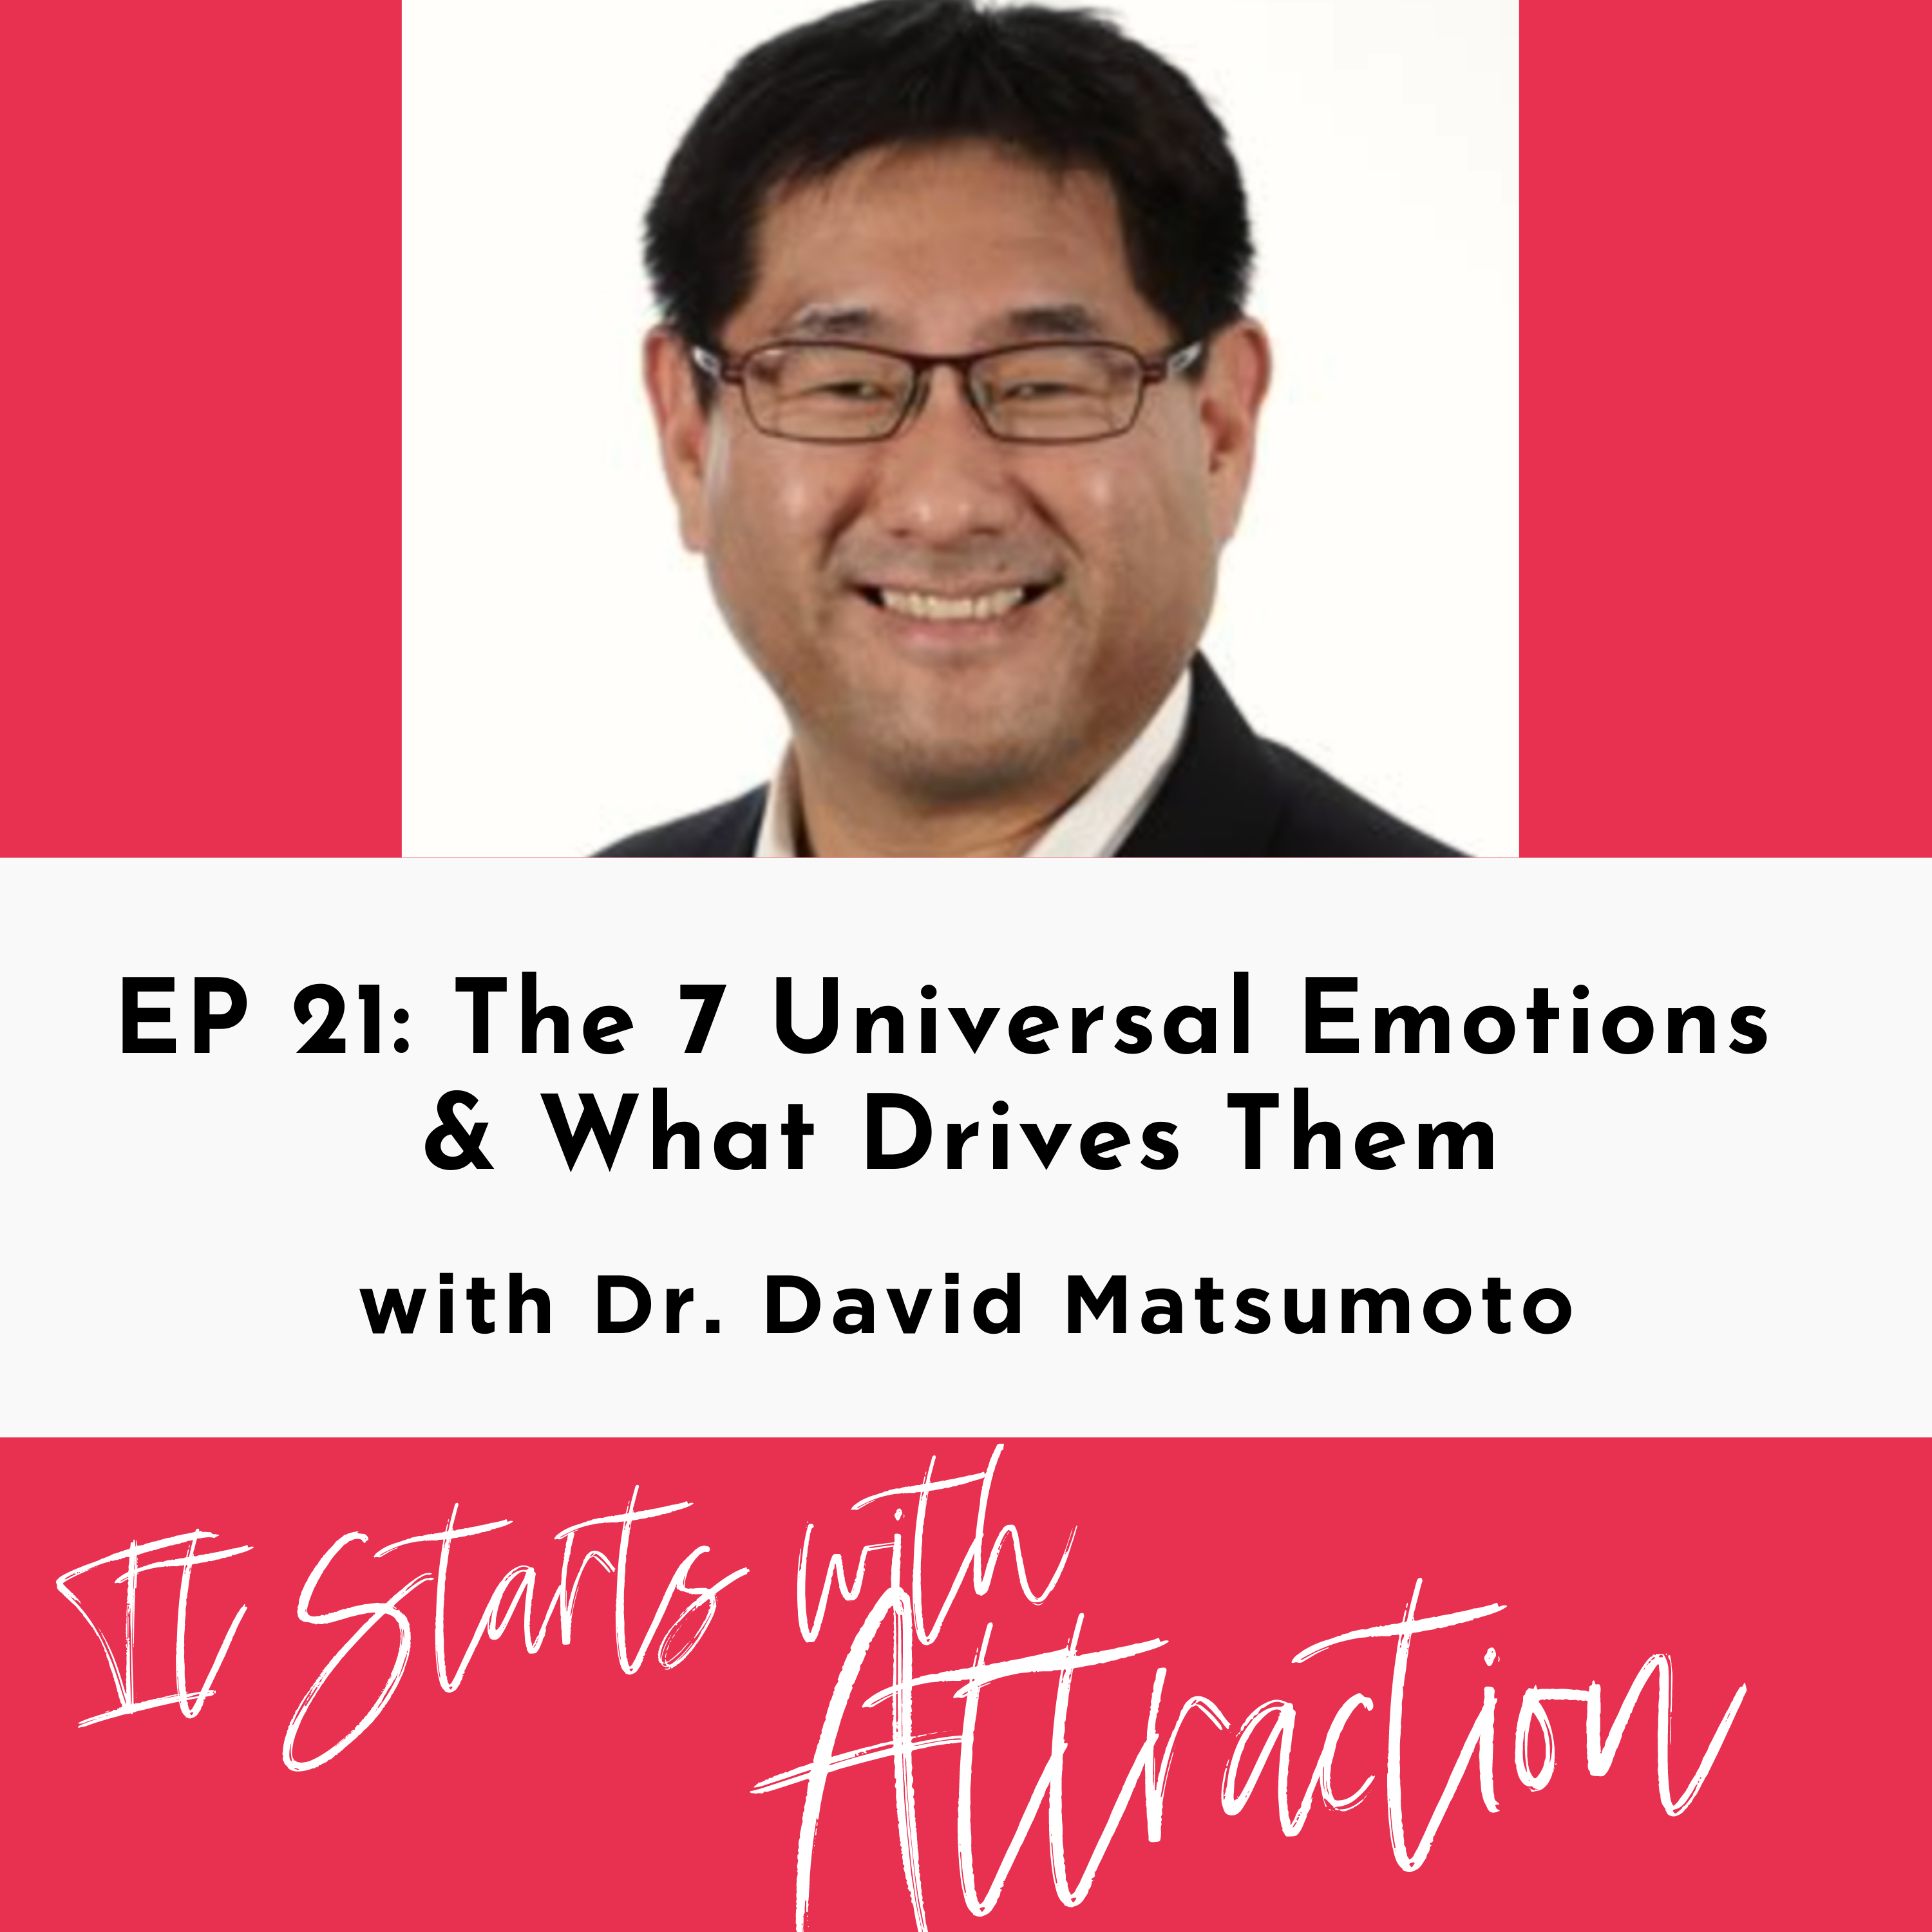 Universal Emotions with Dr. David Matsumoto